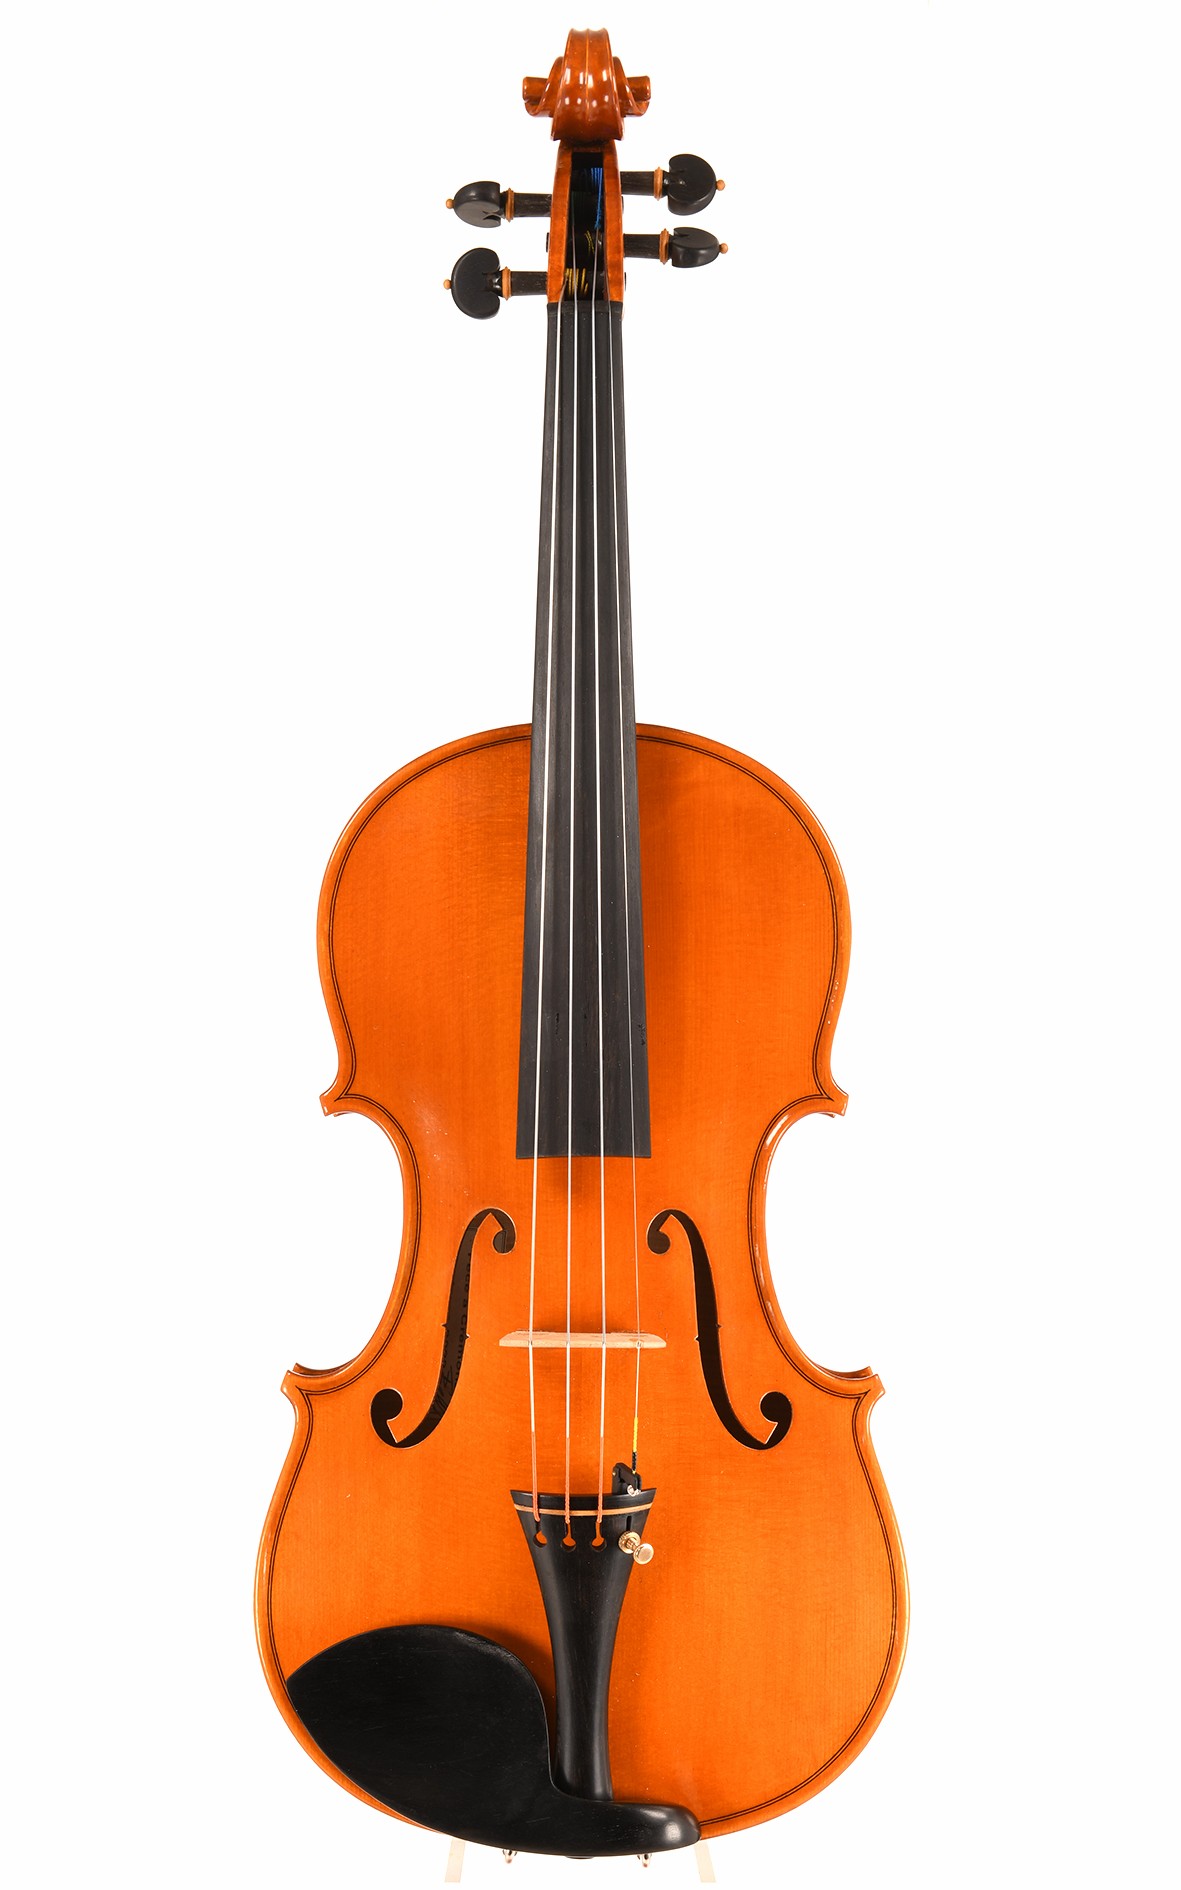 Cremona violin by Ignazio Belli (certificate)